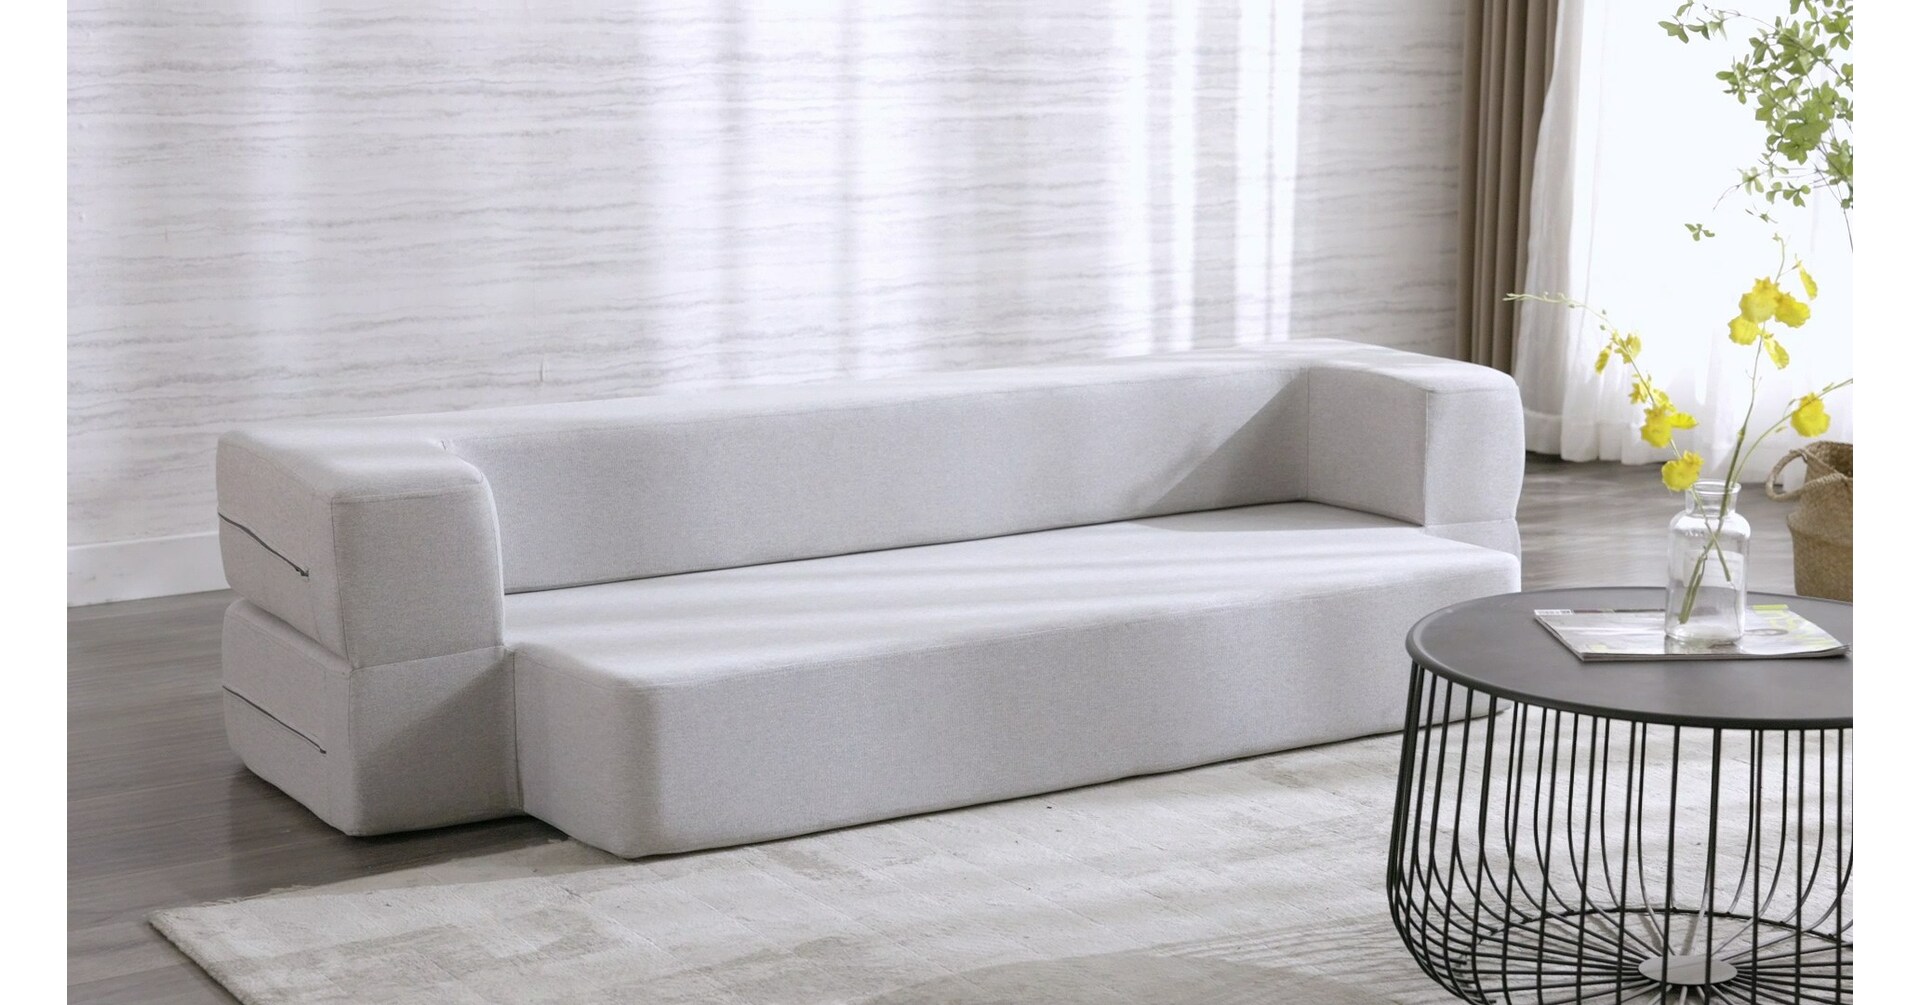 Mjkone Convertible Foldable Sofa  Bed ?p=facebook